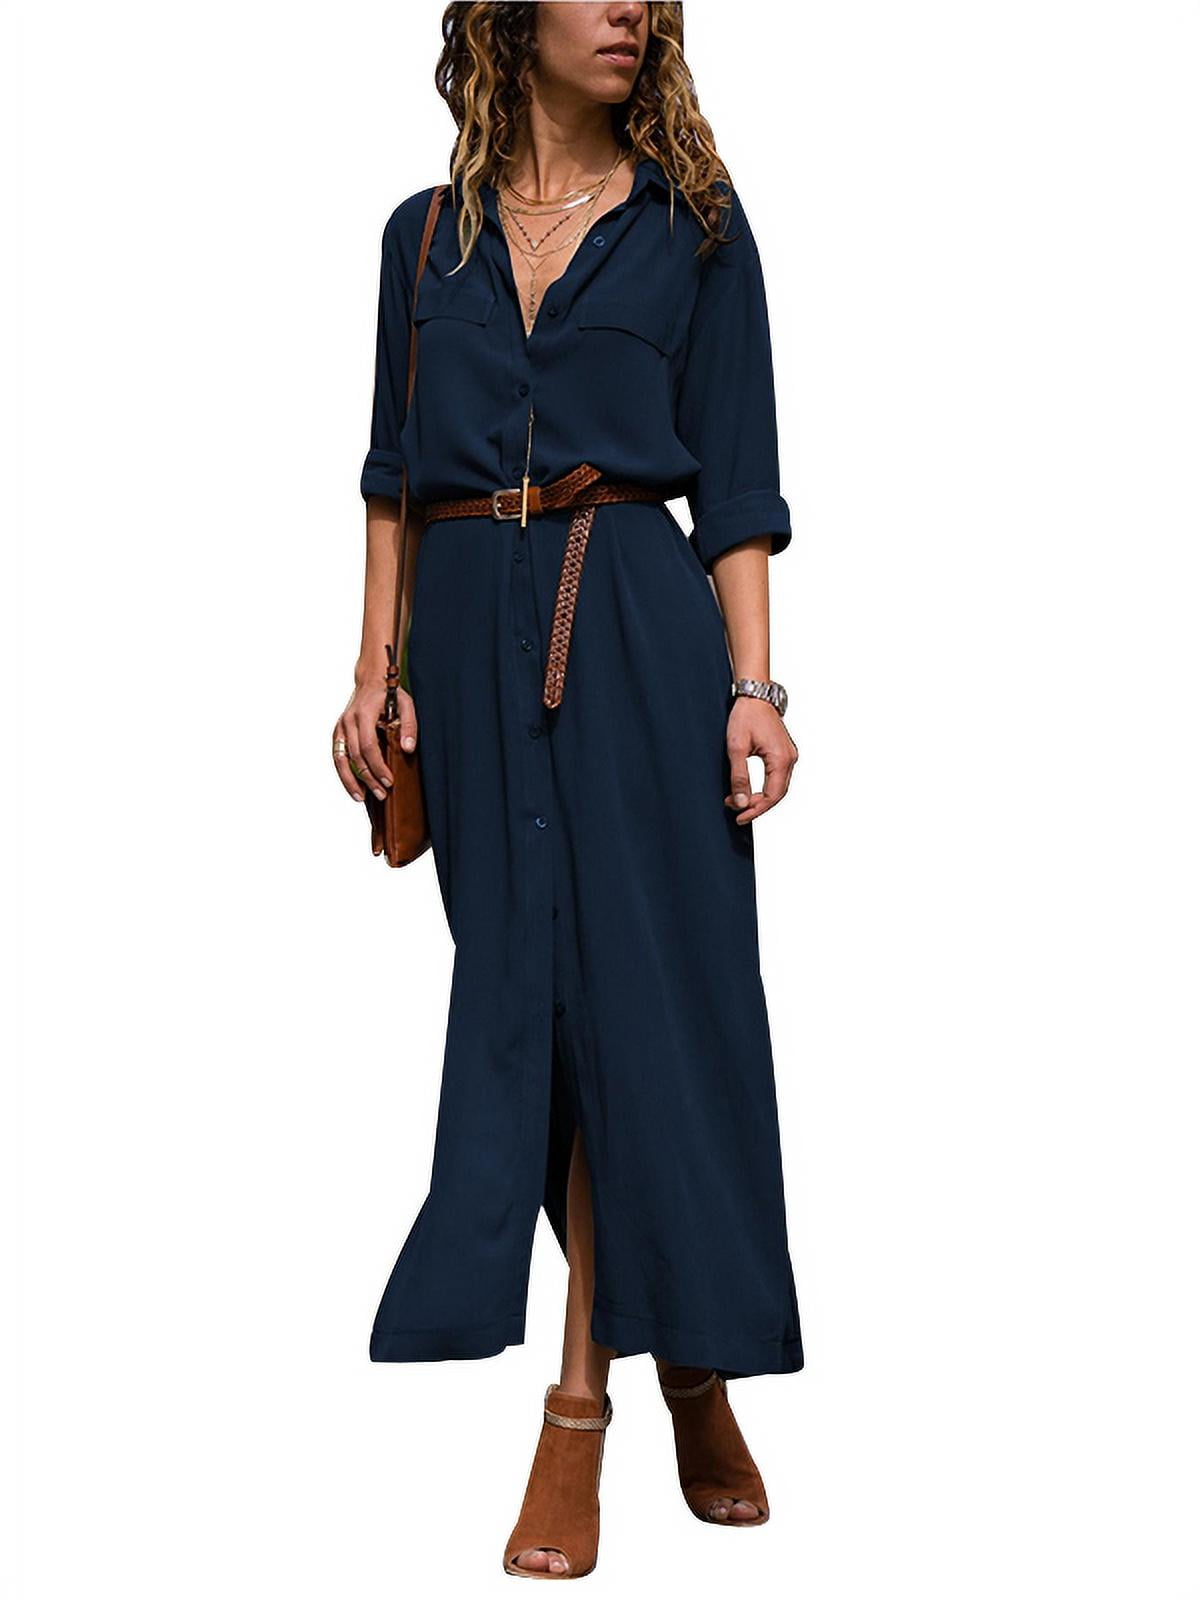 Nananla Spring Women Casual Long Sleeve Solid Shirt Dress - Walmart.com